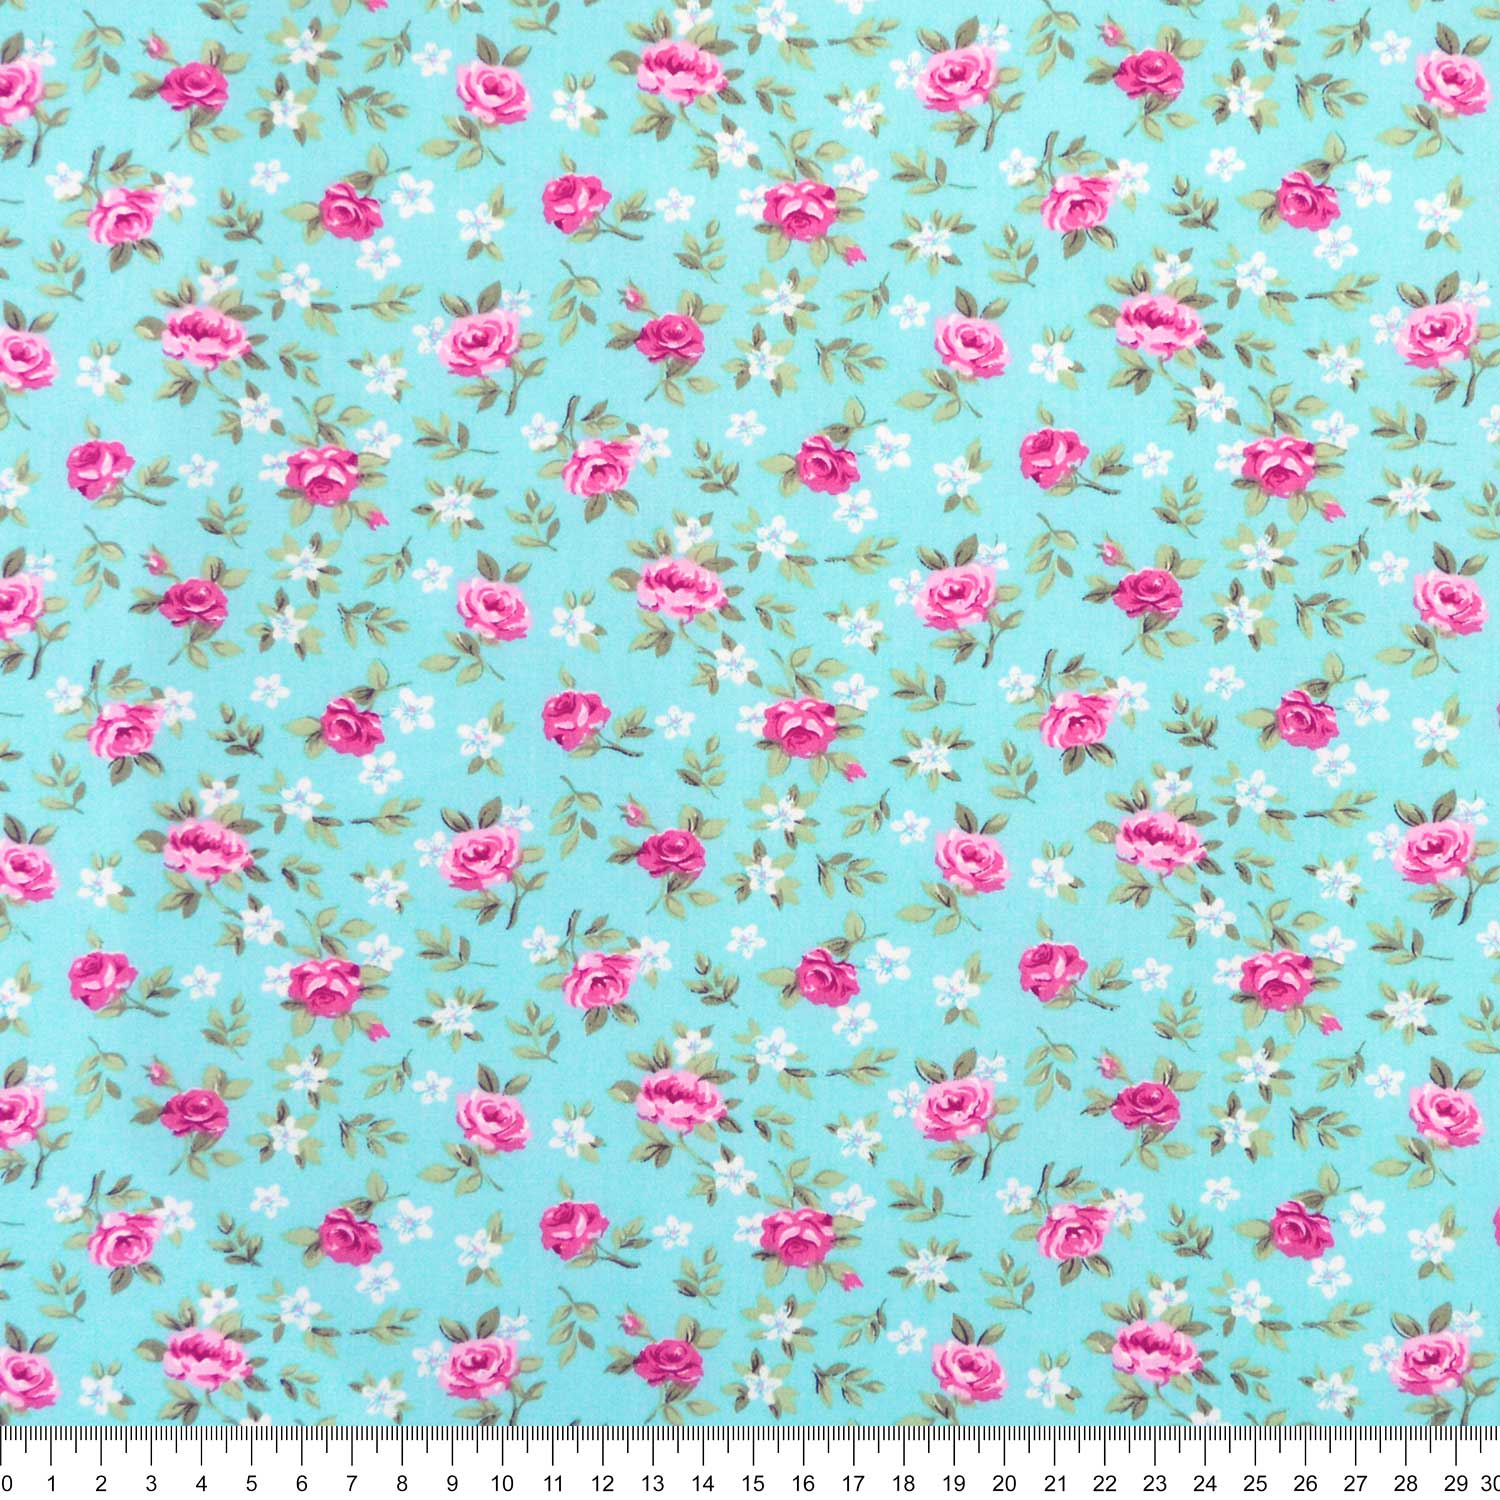 tecido-tricoline-estampado-floral-lucia-rosa-della-aviamentos-tecidos-caldeira-capa2-11034